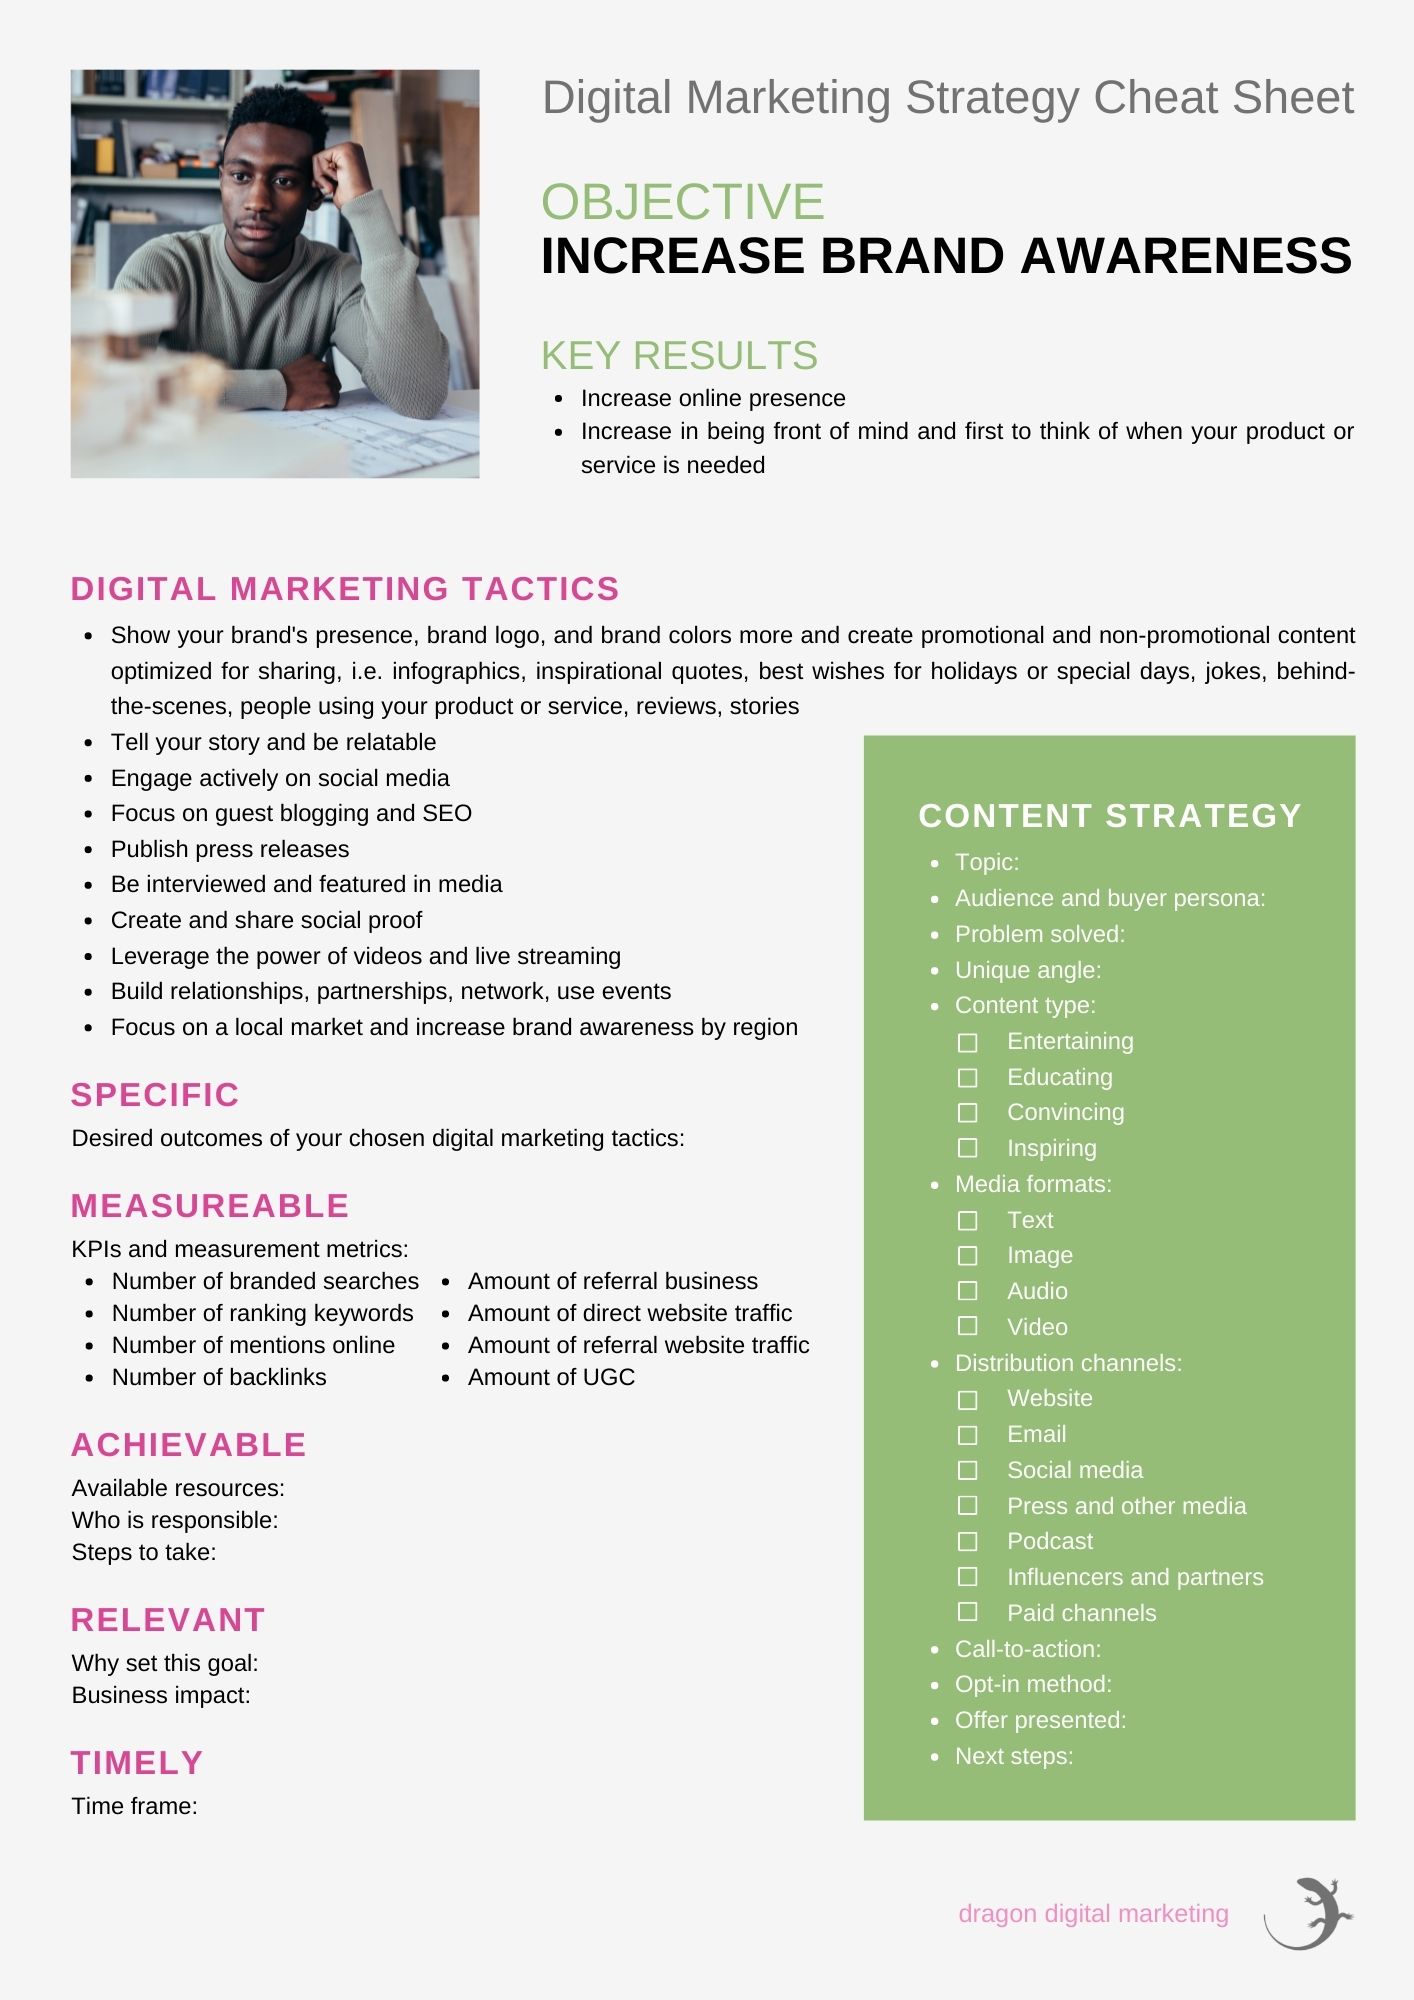 Digital marketing strategy one sheet brand awareness